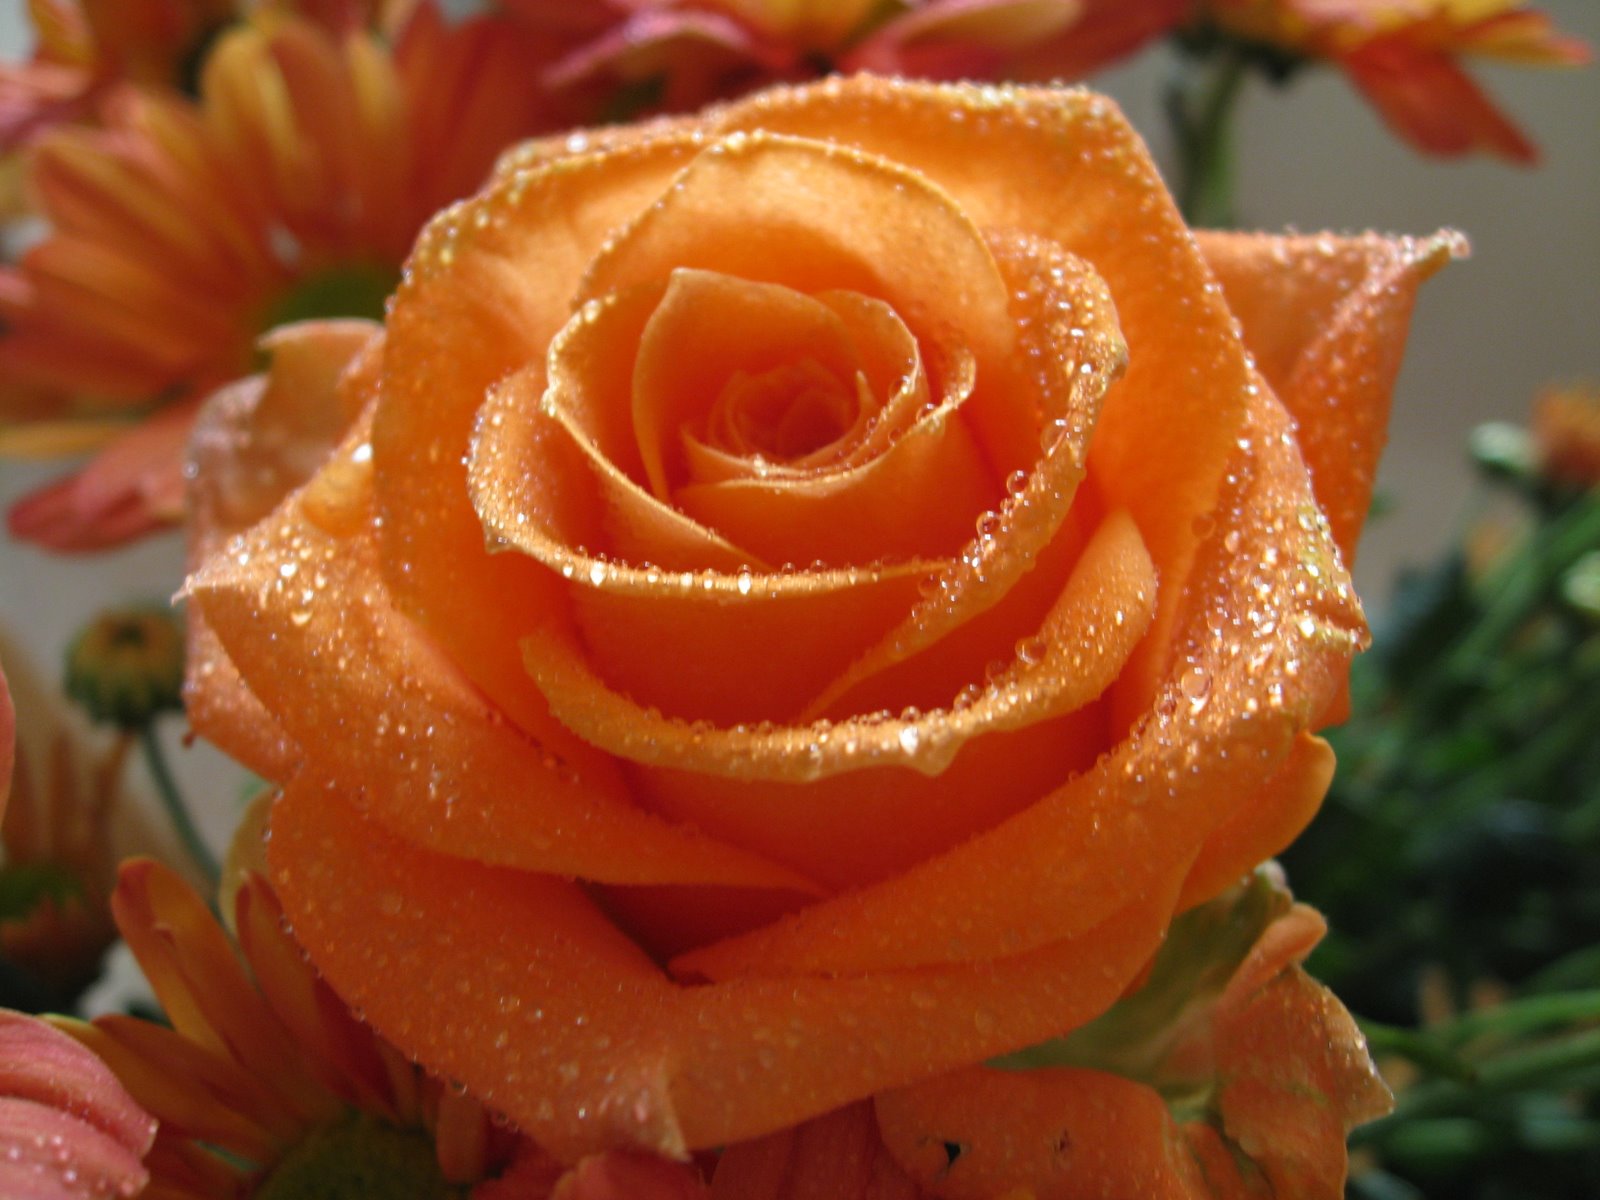 Orange rose photo